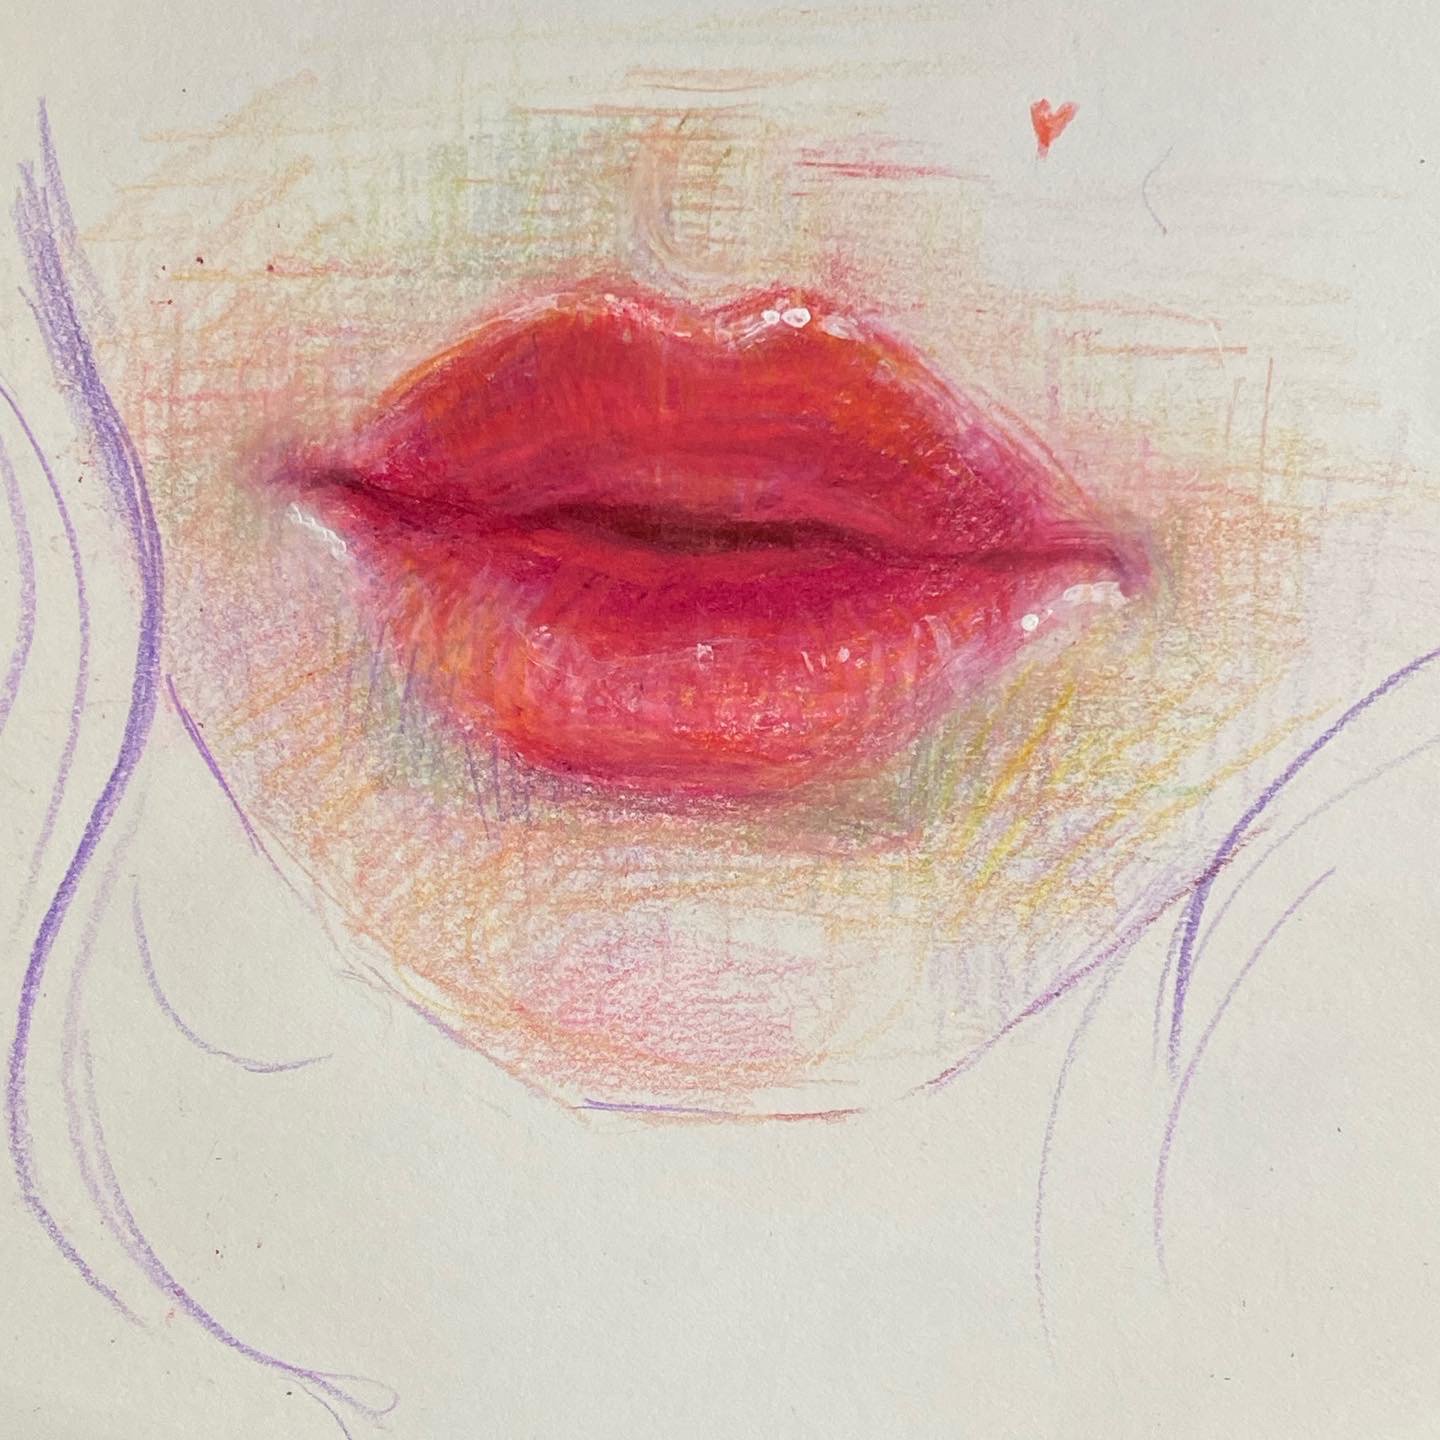 Lips drawing | Color pencil drawing, Lips drawing, Color pencil art